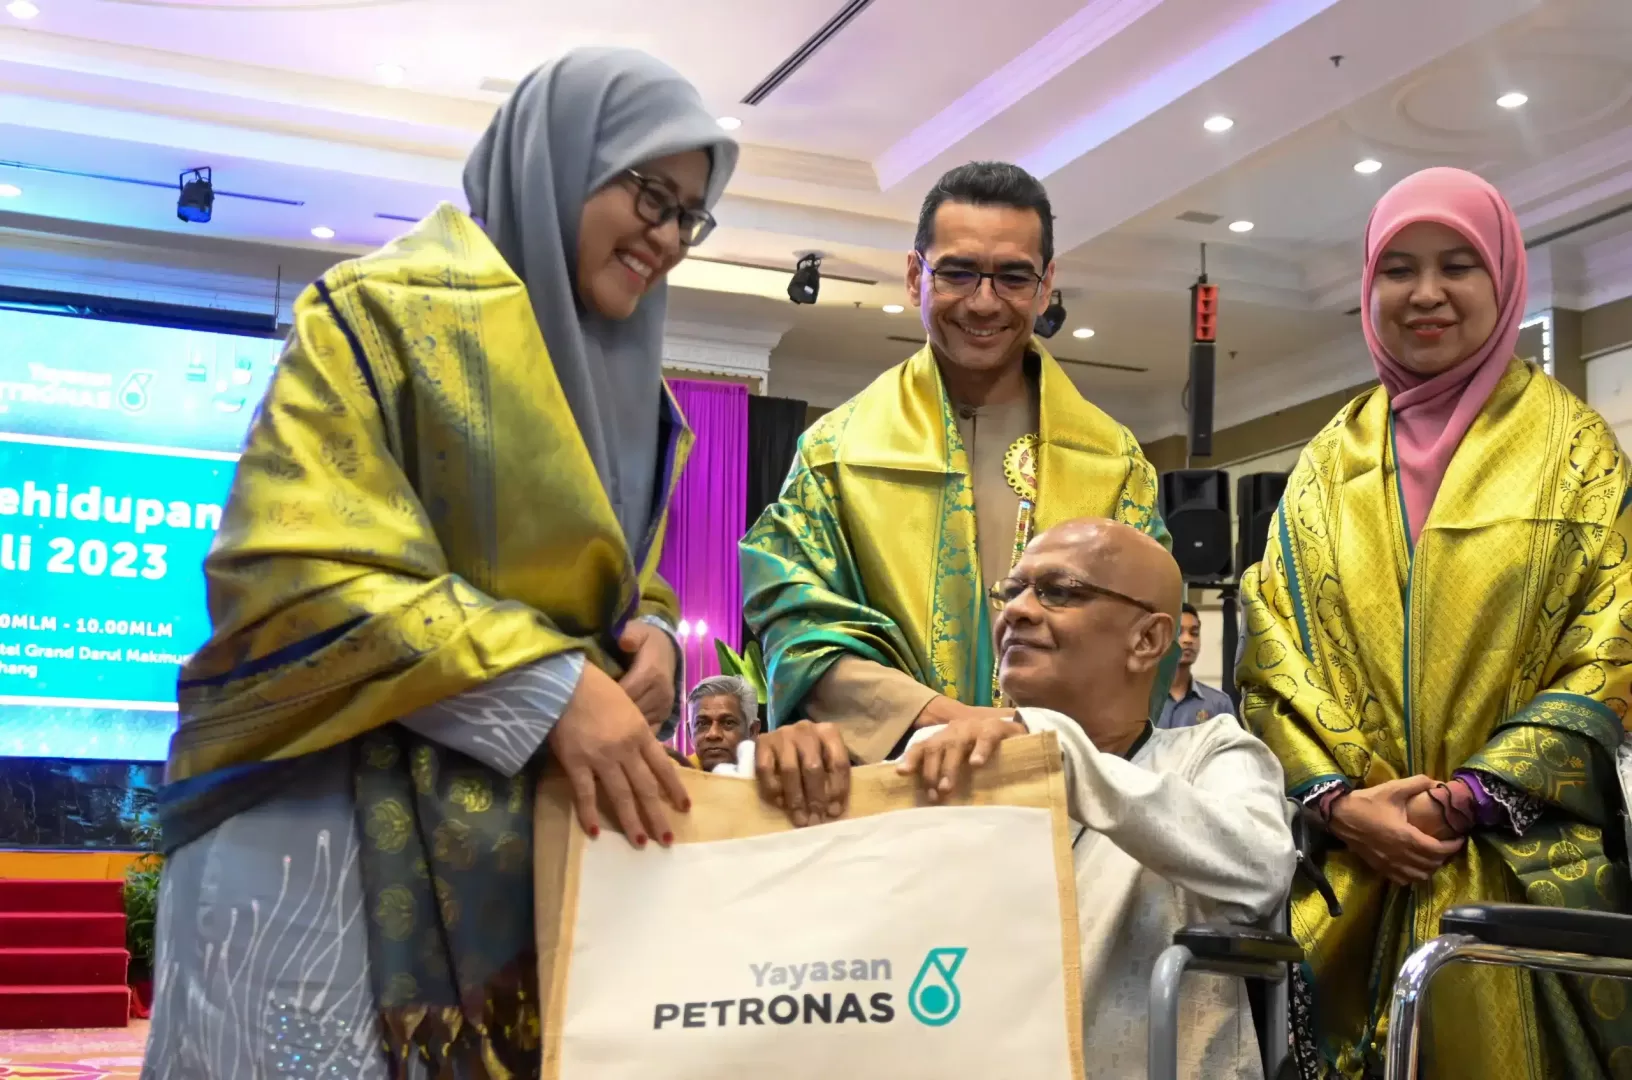 Yayasan PETRONAS’ Uplifting Lives contribution spreads joy across the Nation this Deepavali